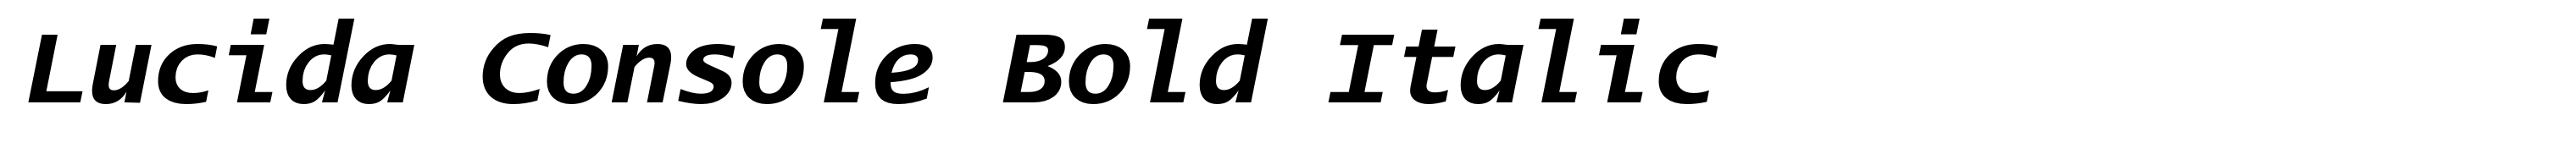 Lucida Console Bold Italic